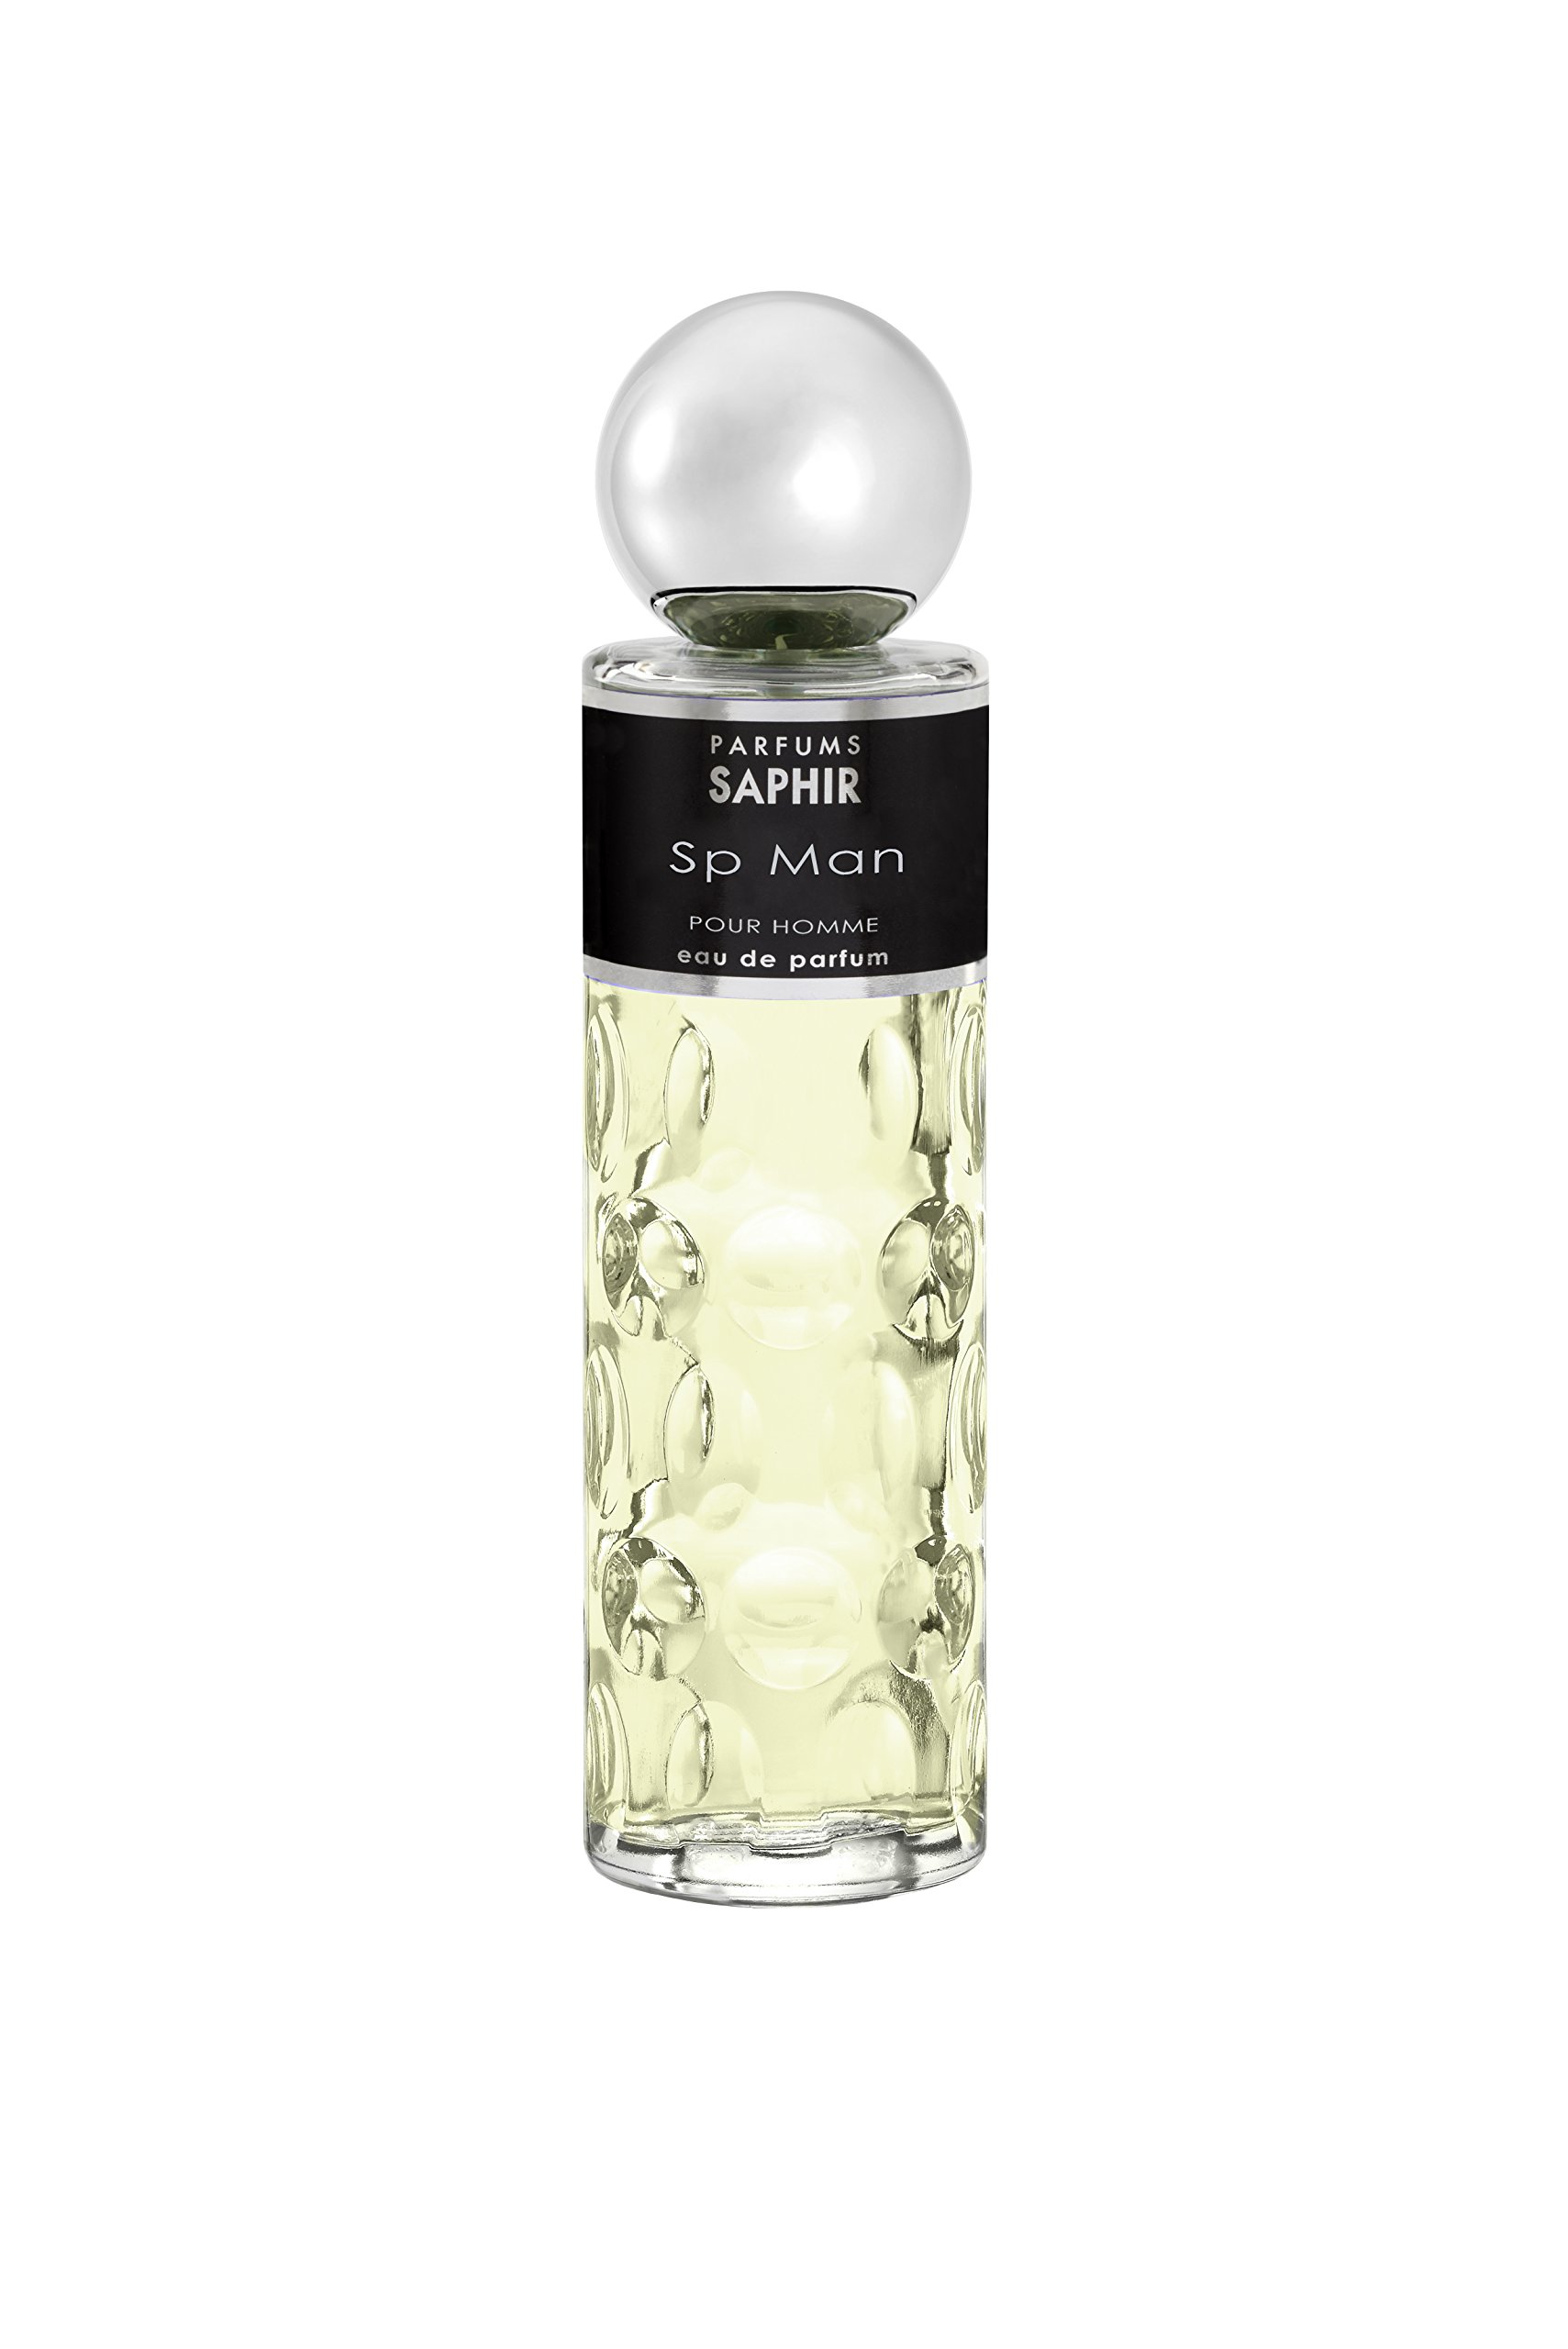 Parfums Saphir - Eau de Parfum 200 ml - sp man